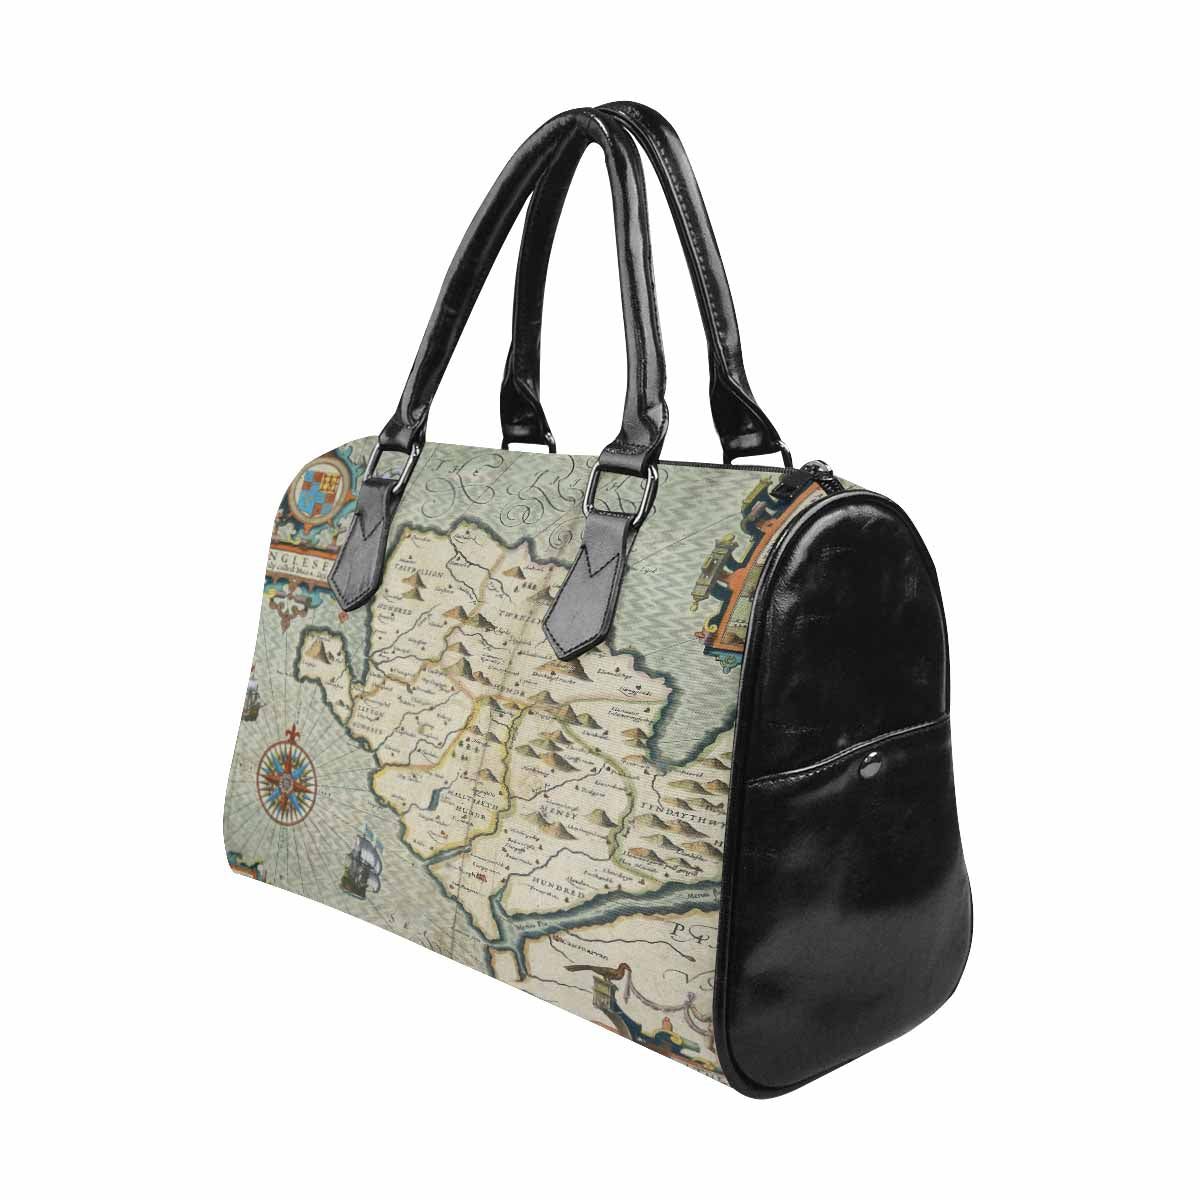 Antique Map design Boston handbag, Model 1695321, Design 13